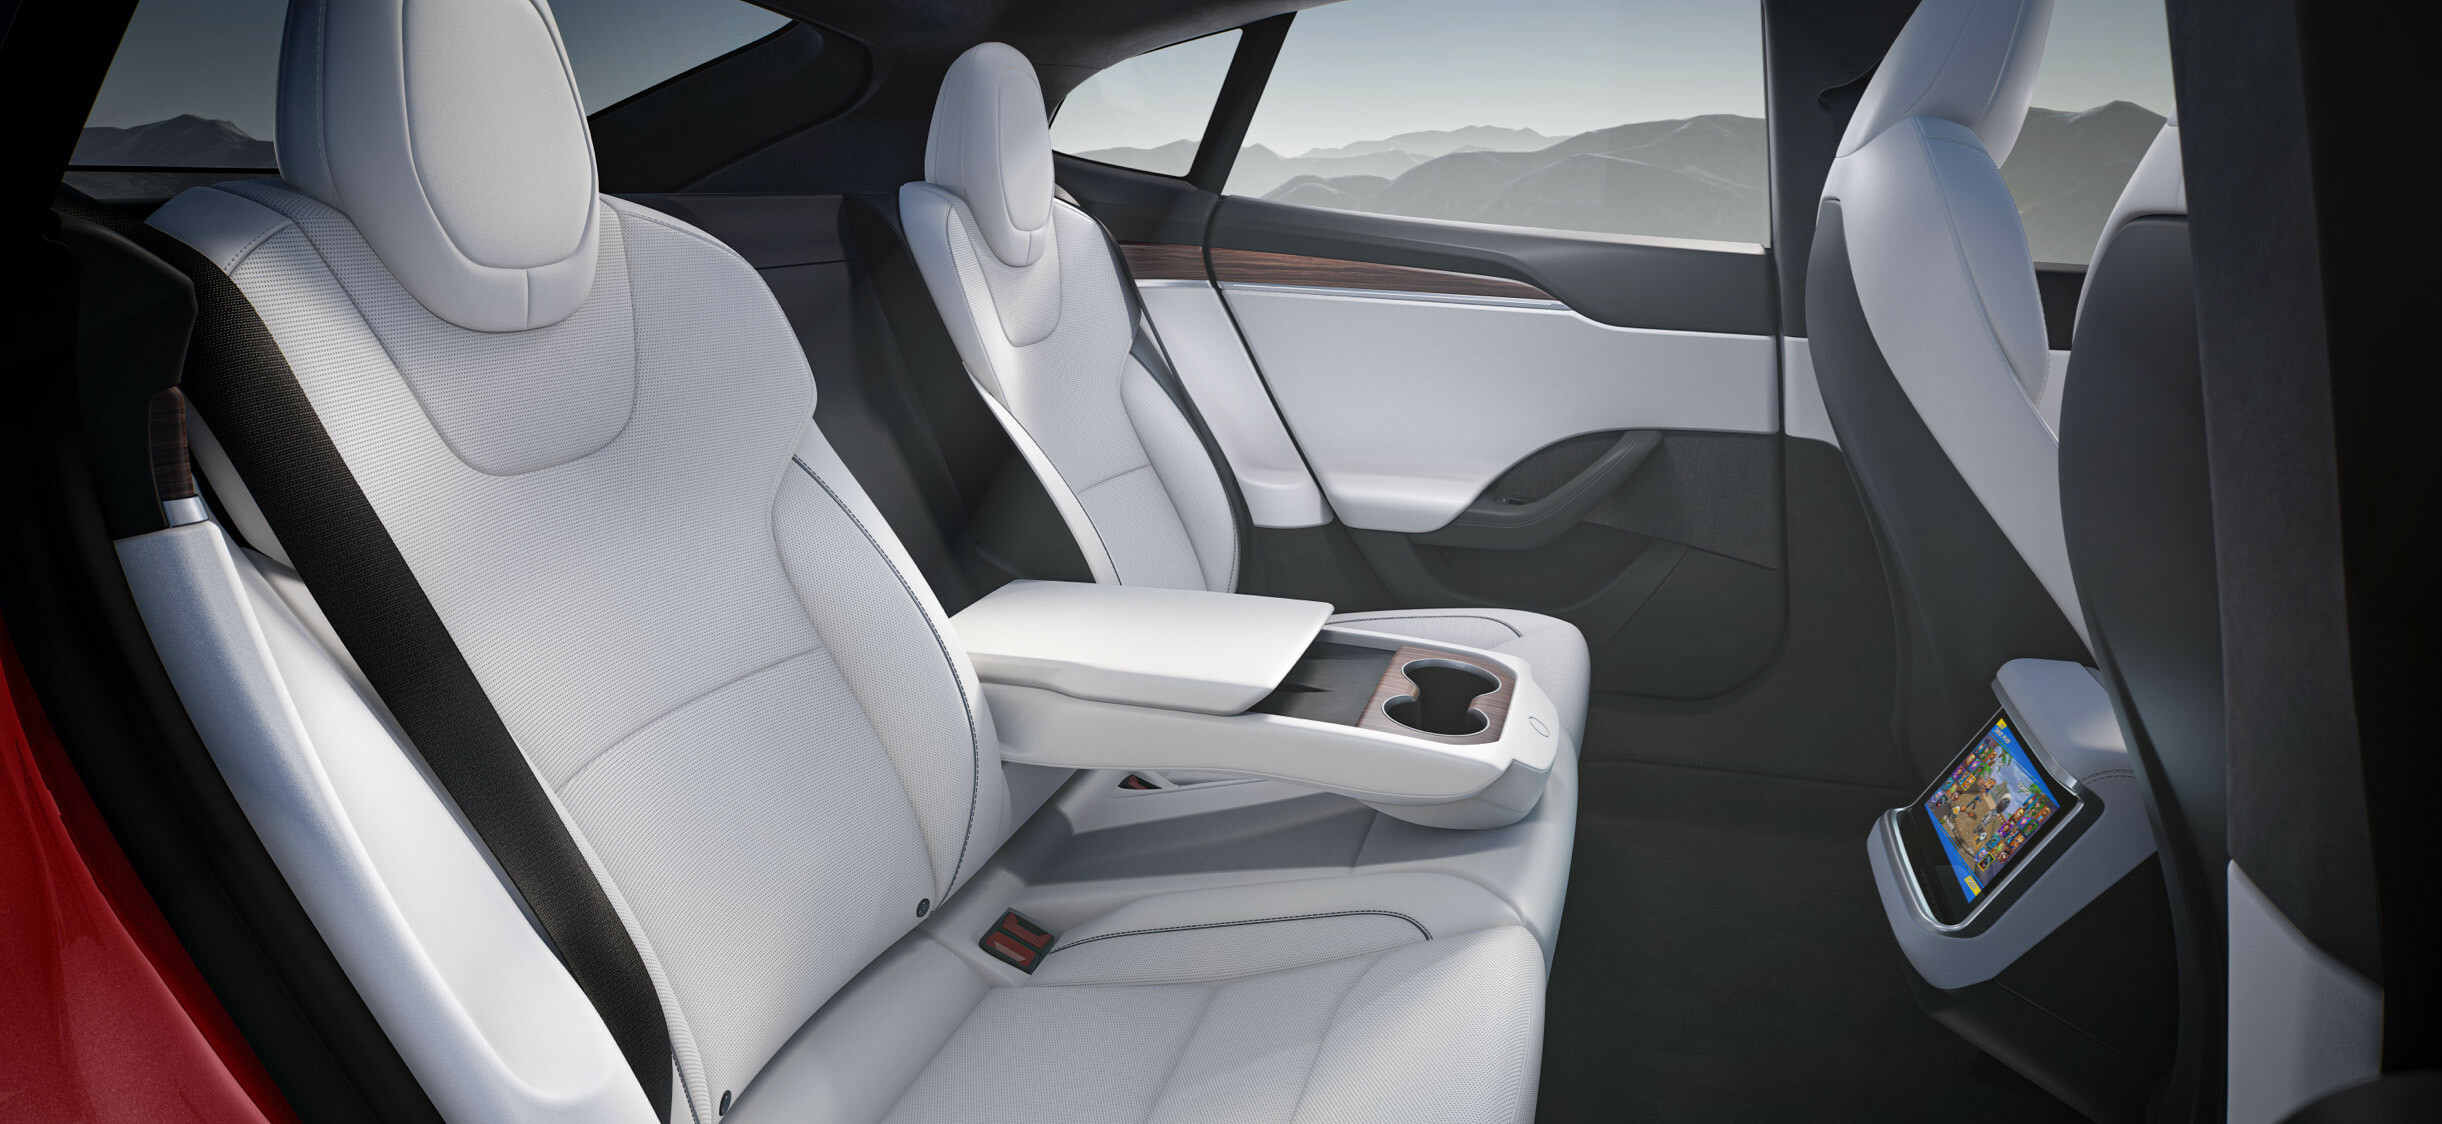 Model S interieur achterbank